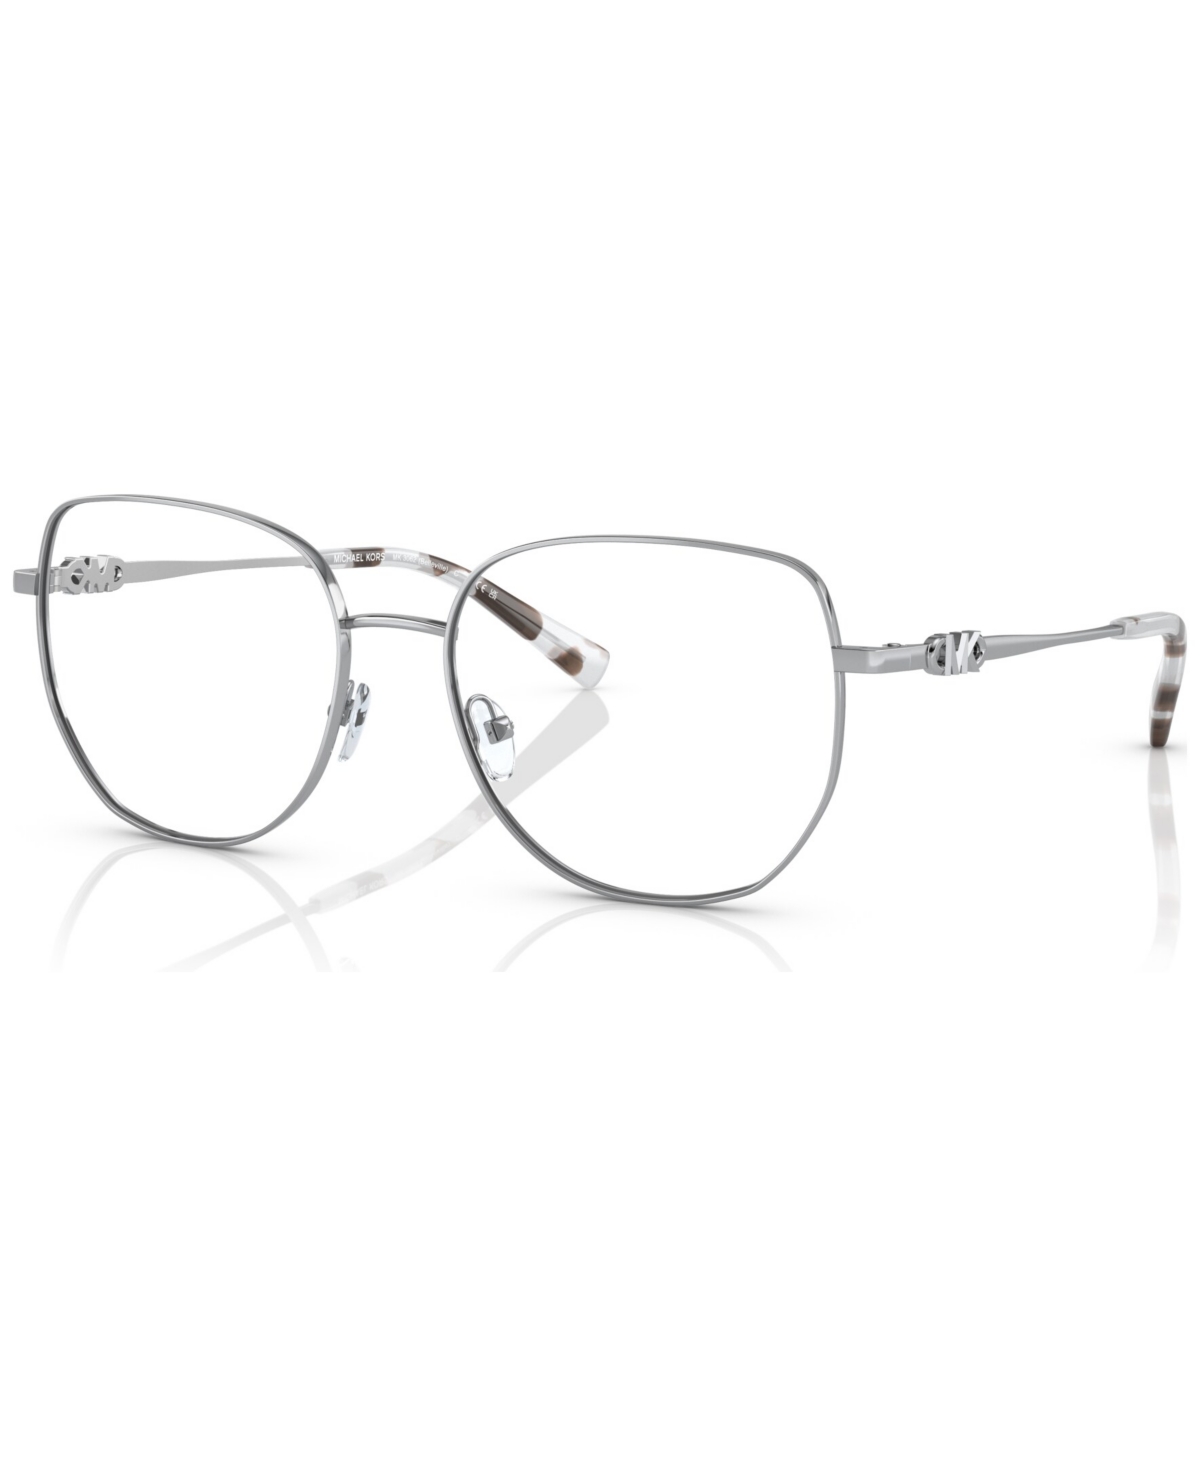 Women's Square Eyeglasses, MK306254-o - Silver Tone